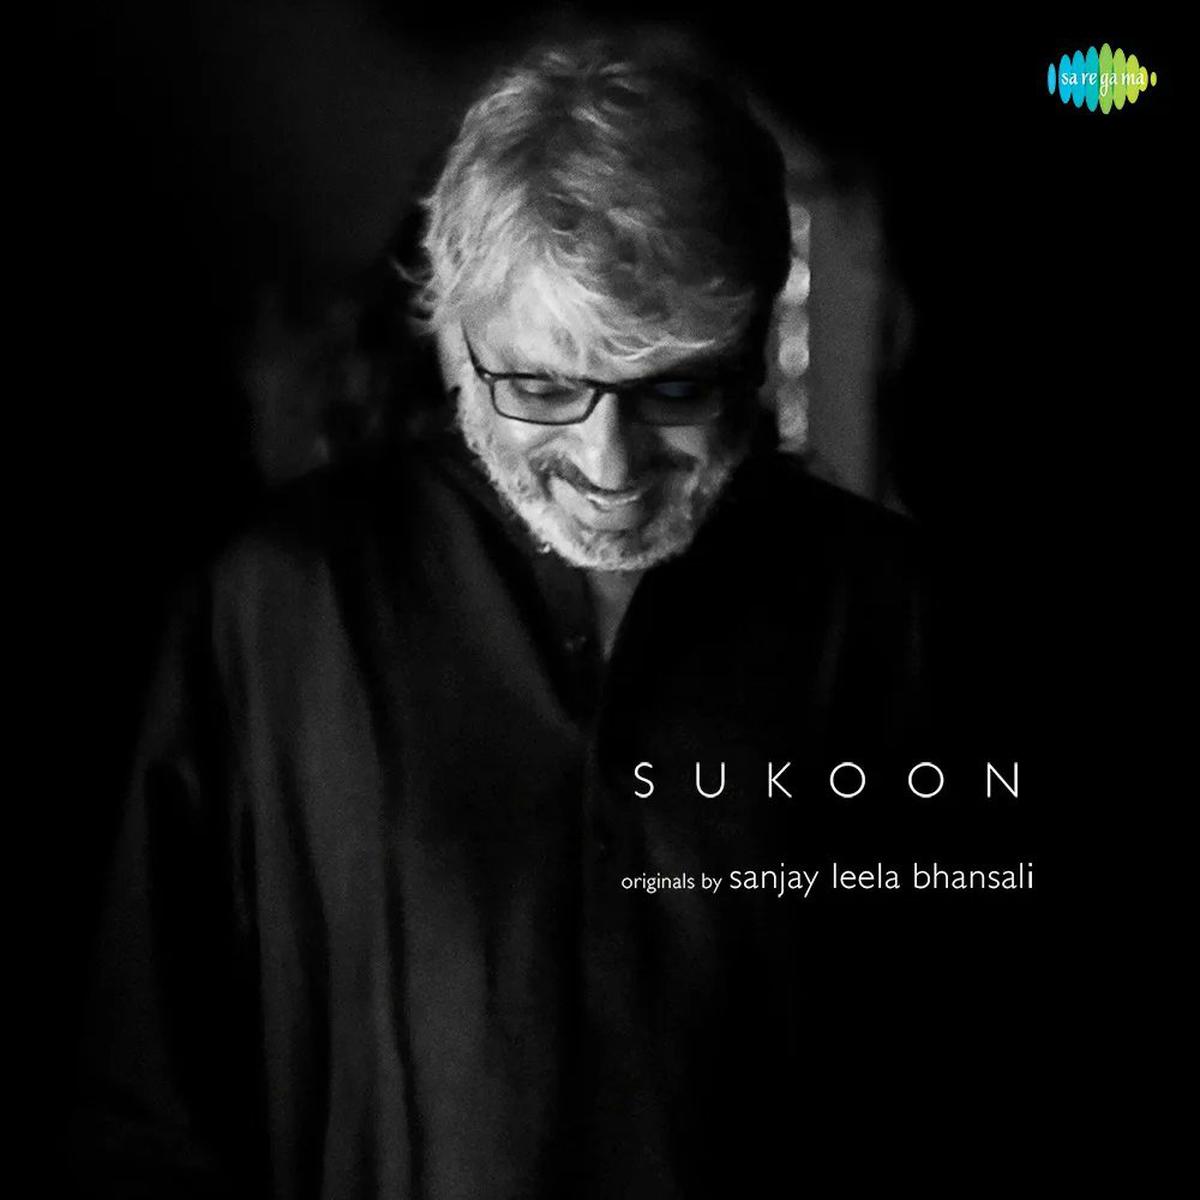 Sanjay Leela Bhansali announces first music album 'Sukoon', to release on December 7 - The Hindu